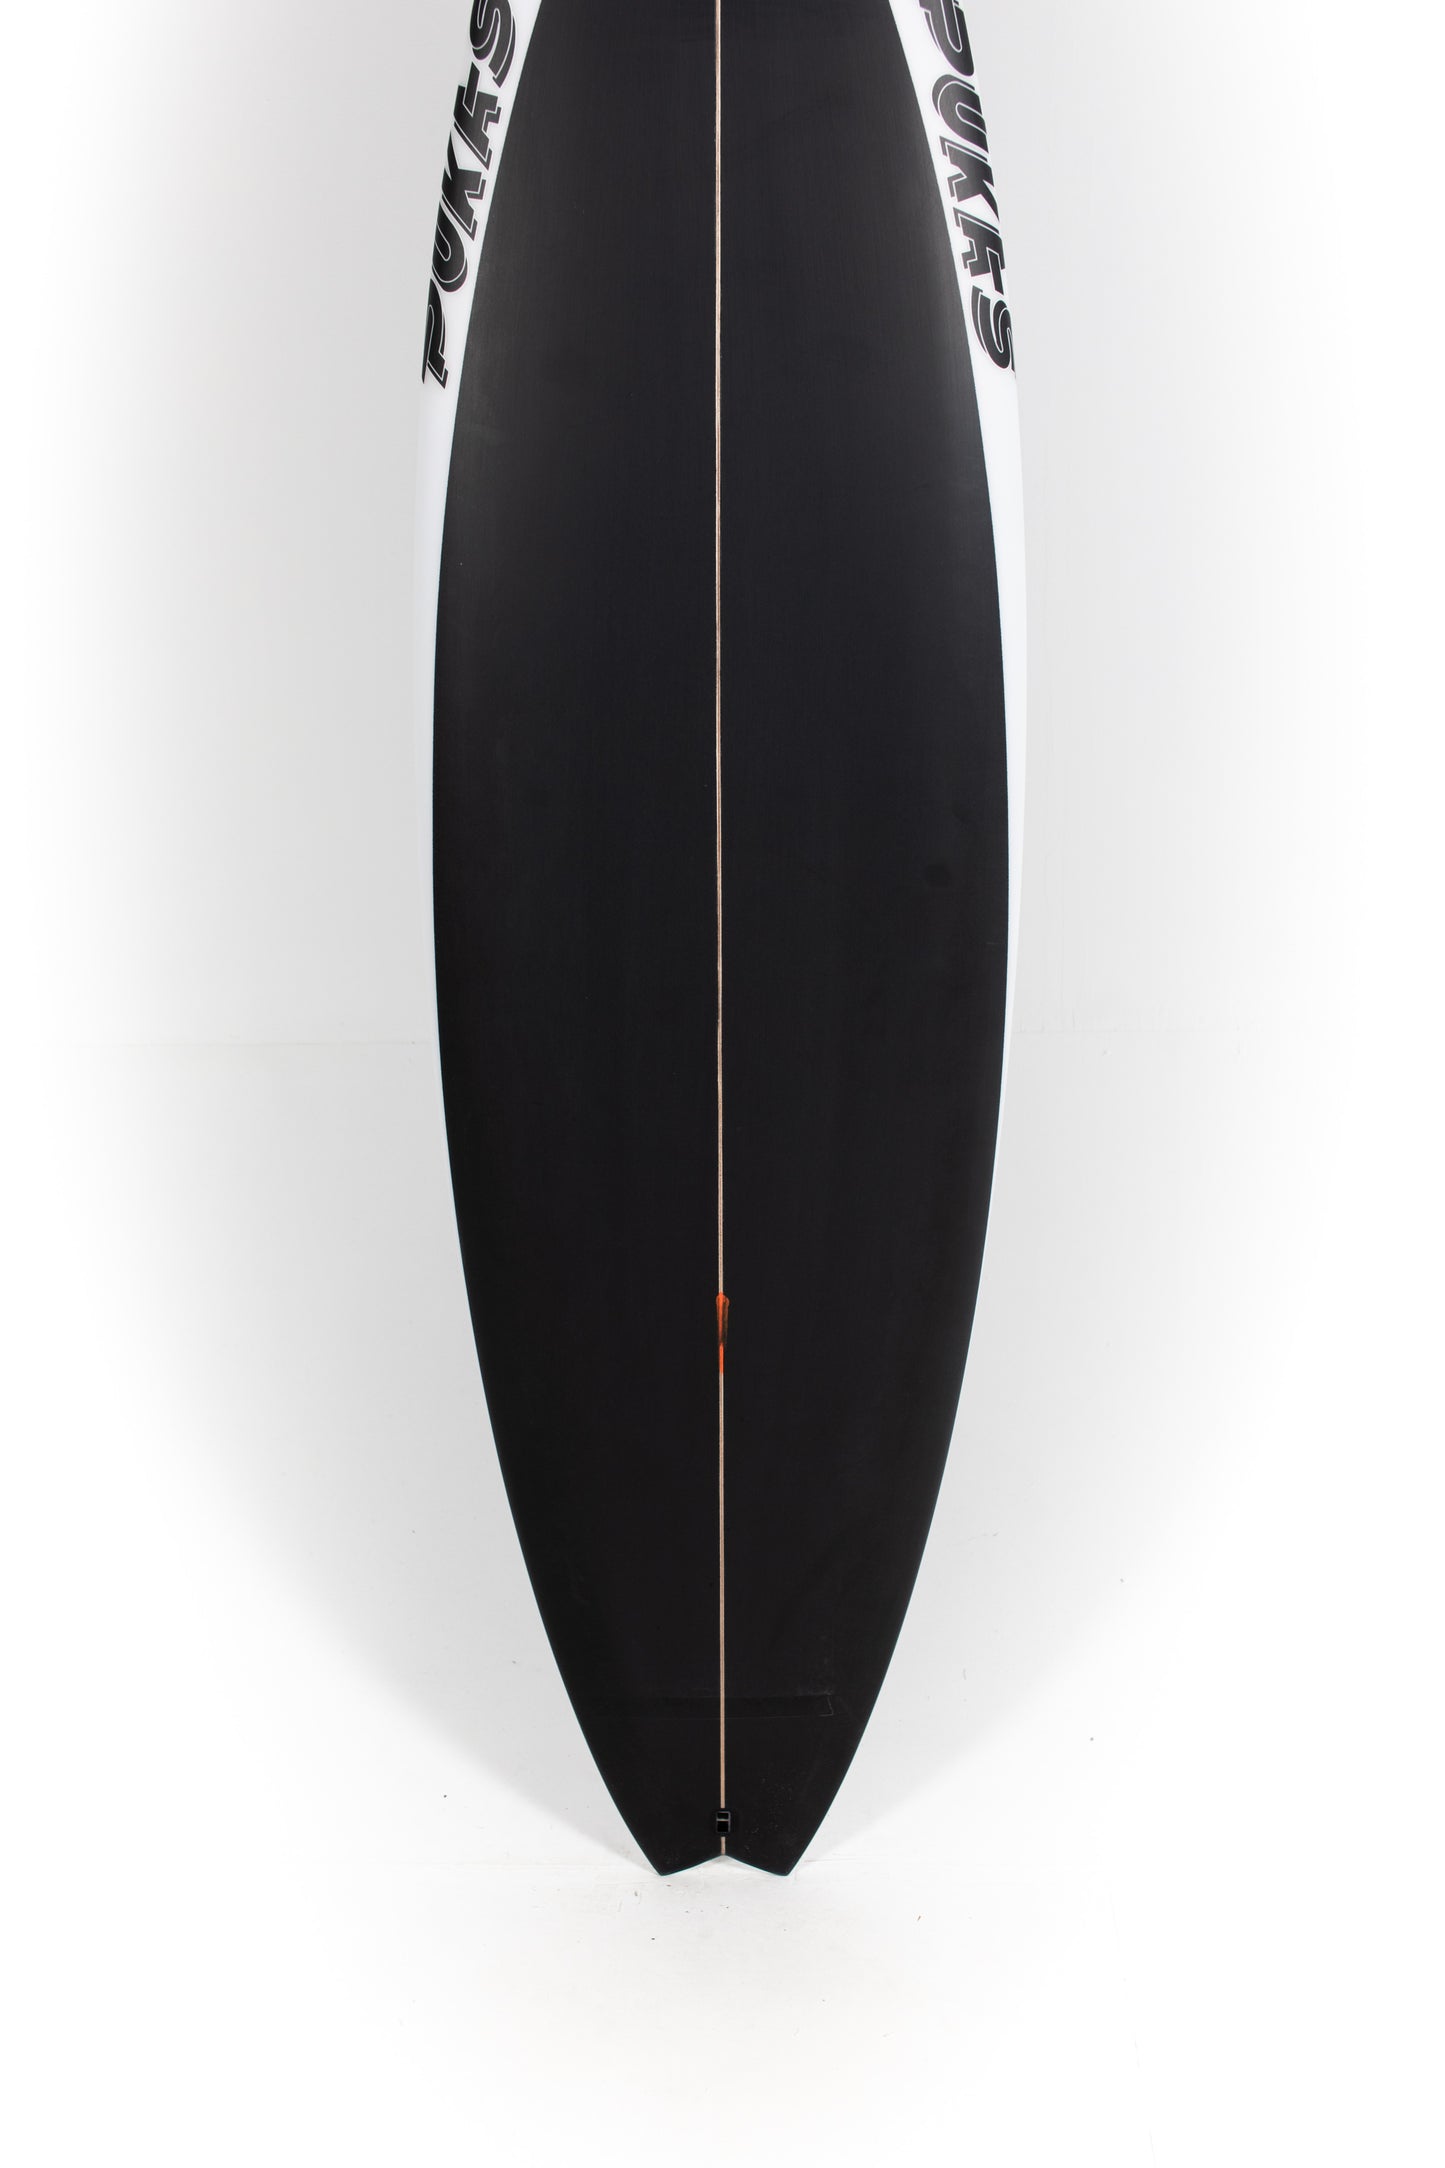 
                  
                    Pukas Surf Shop - Pukas Surfboard - WATER LION ULTRA by Chris Christenson - 6’1” x 18 3/4 x 2 3/8 - 28,99L - PC00849
                  
                